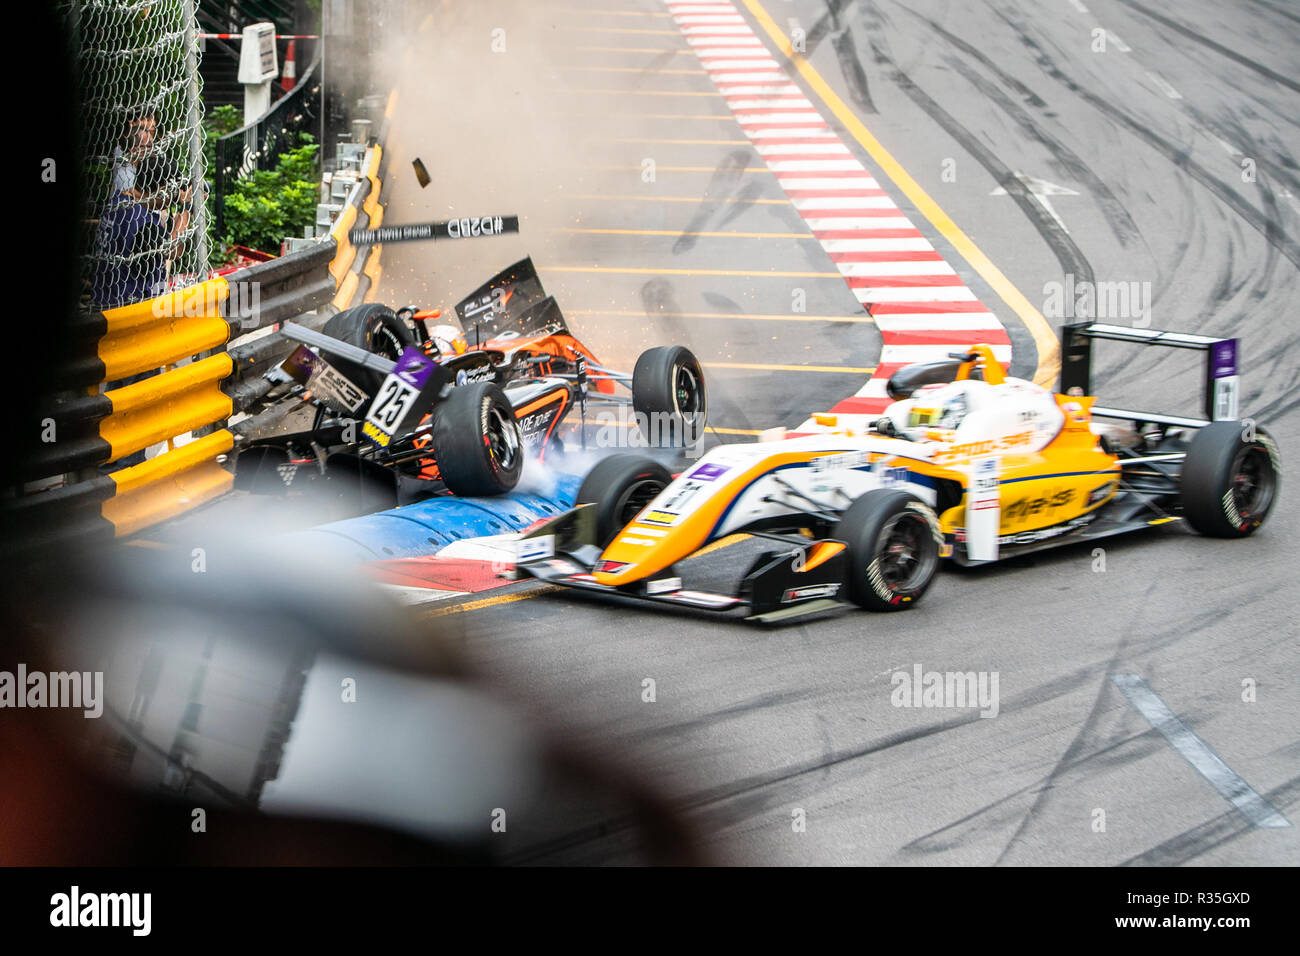 Sophia Floresch Unfall Macau Grand Prix 2018 Stockfoto